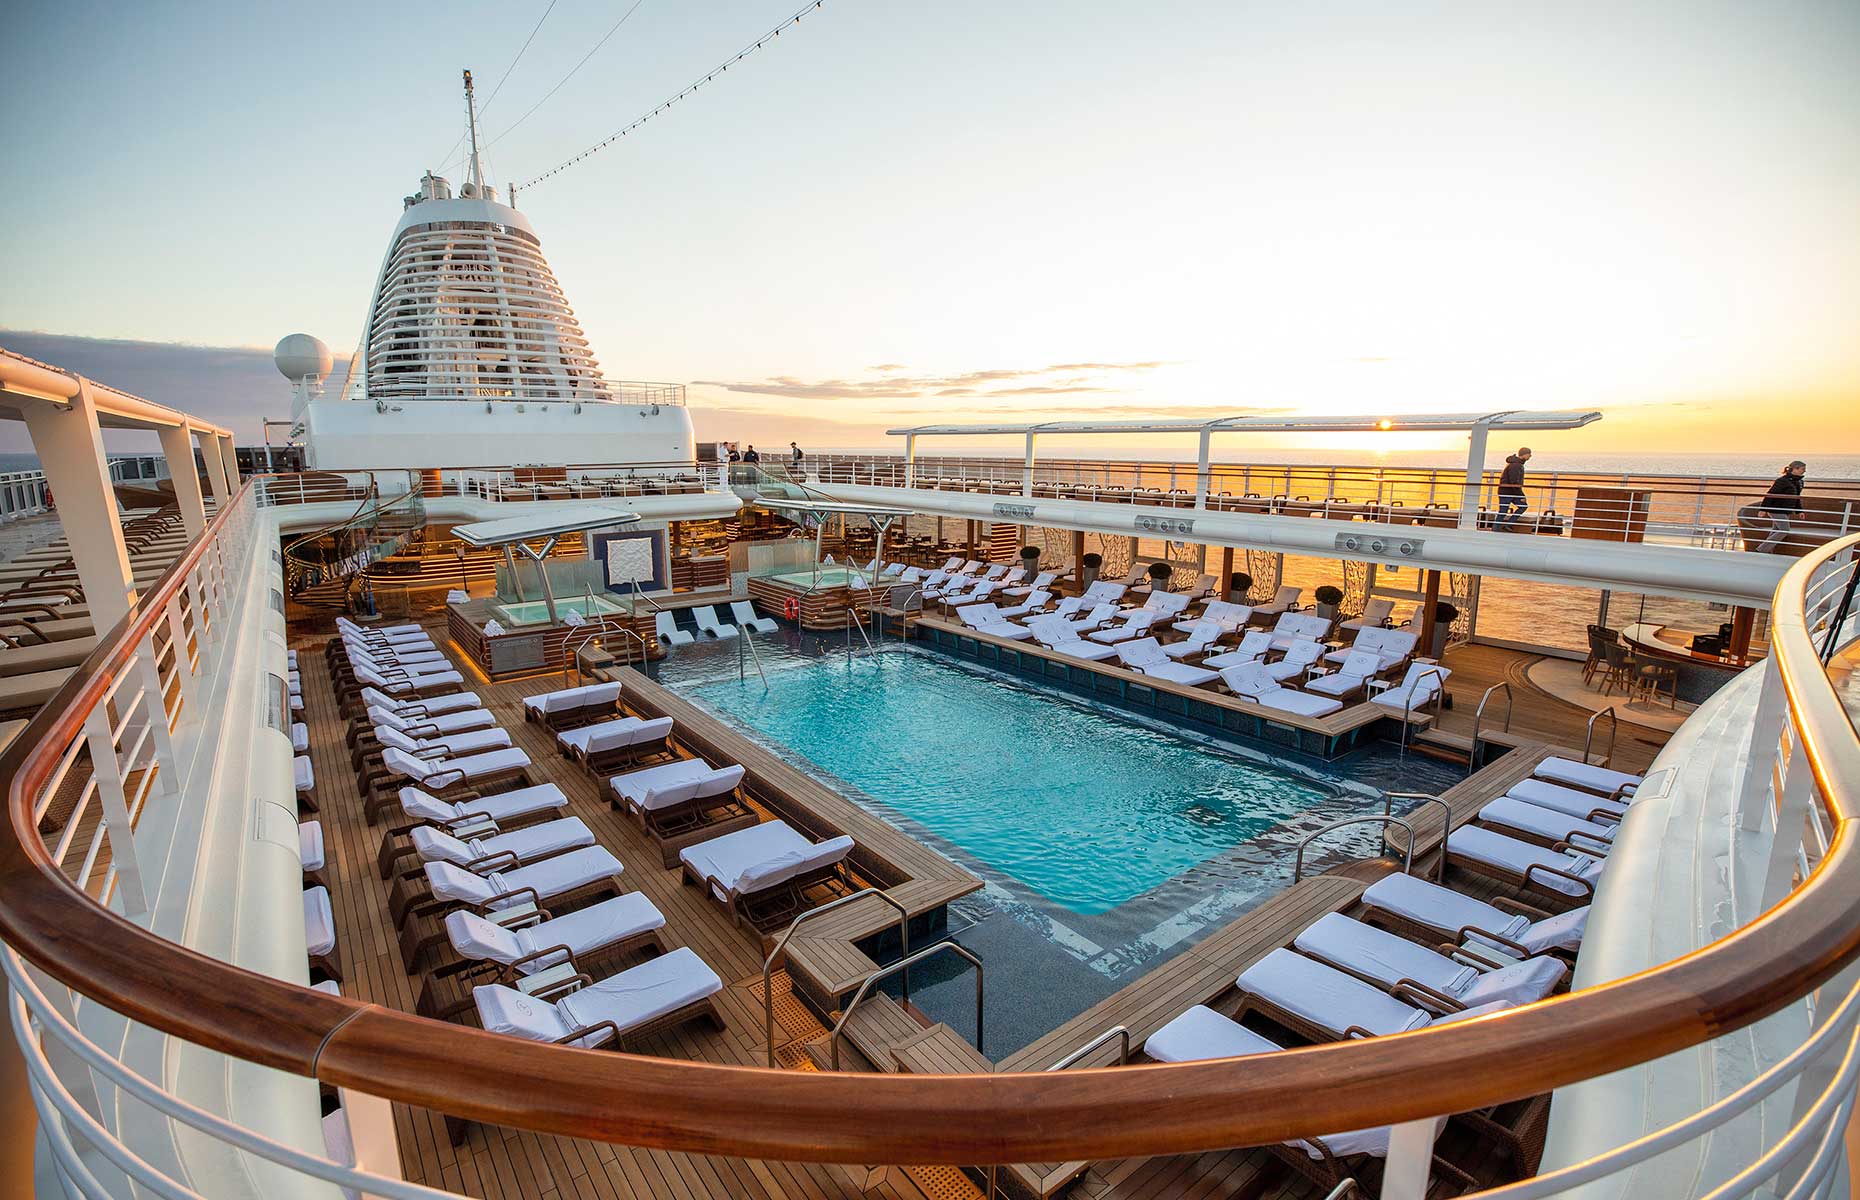 Pool deck on Regent Seven Seas Splendor (Image: Courtesy of Regent Seven Seas)